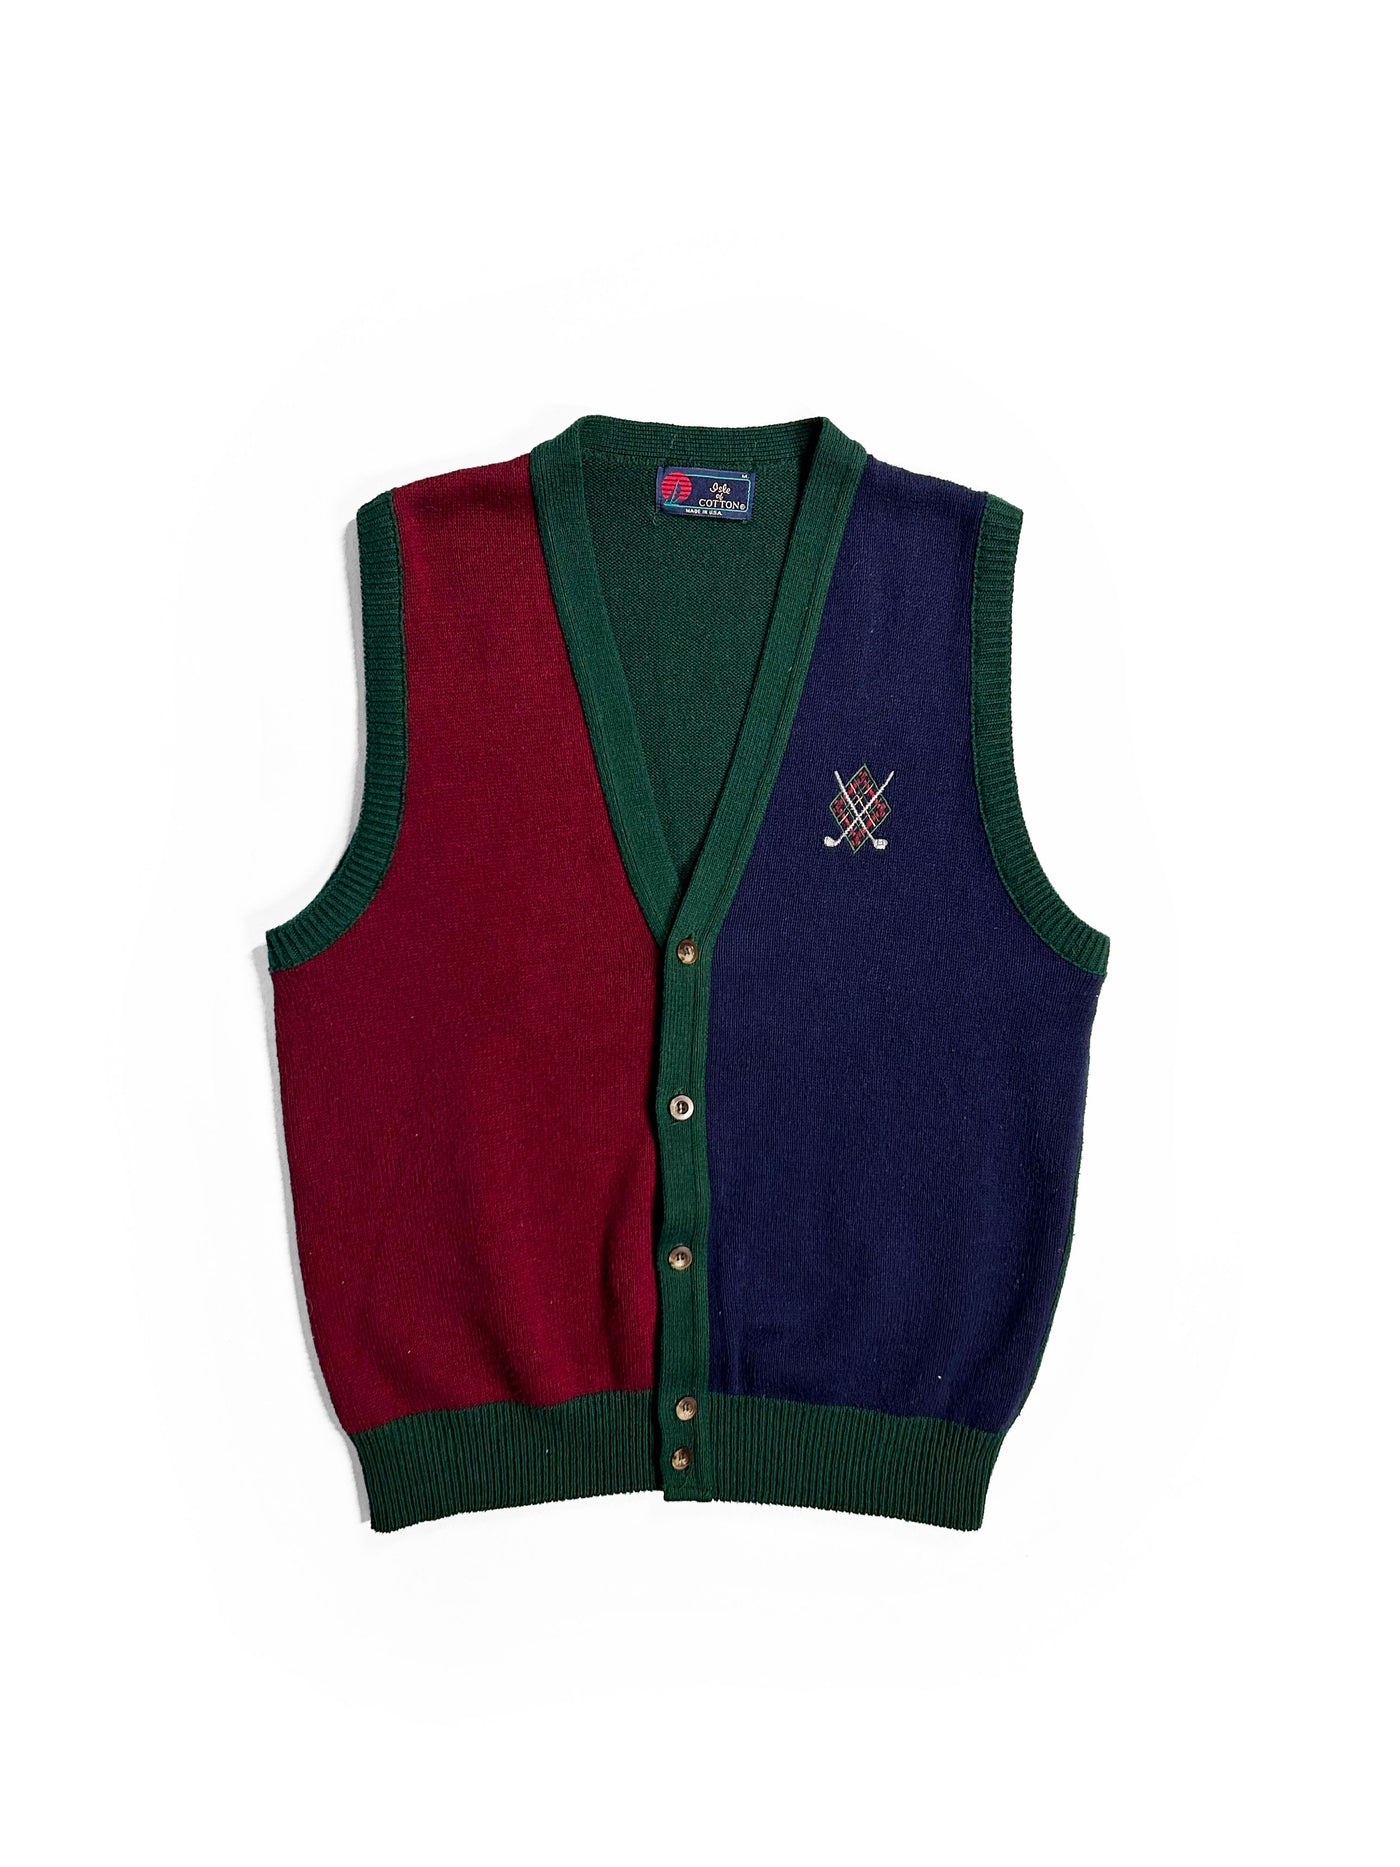 Vintage 90s Colorblock Golf Cardigan Vest